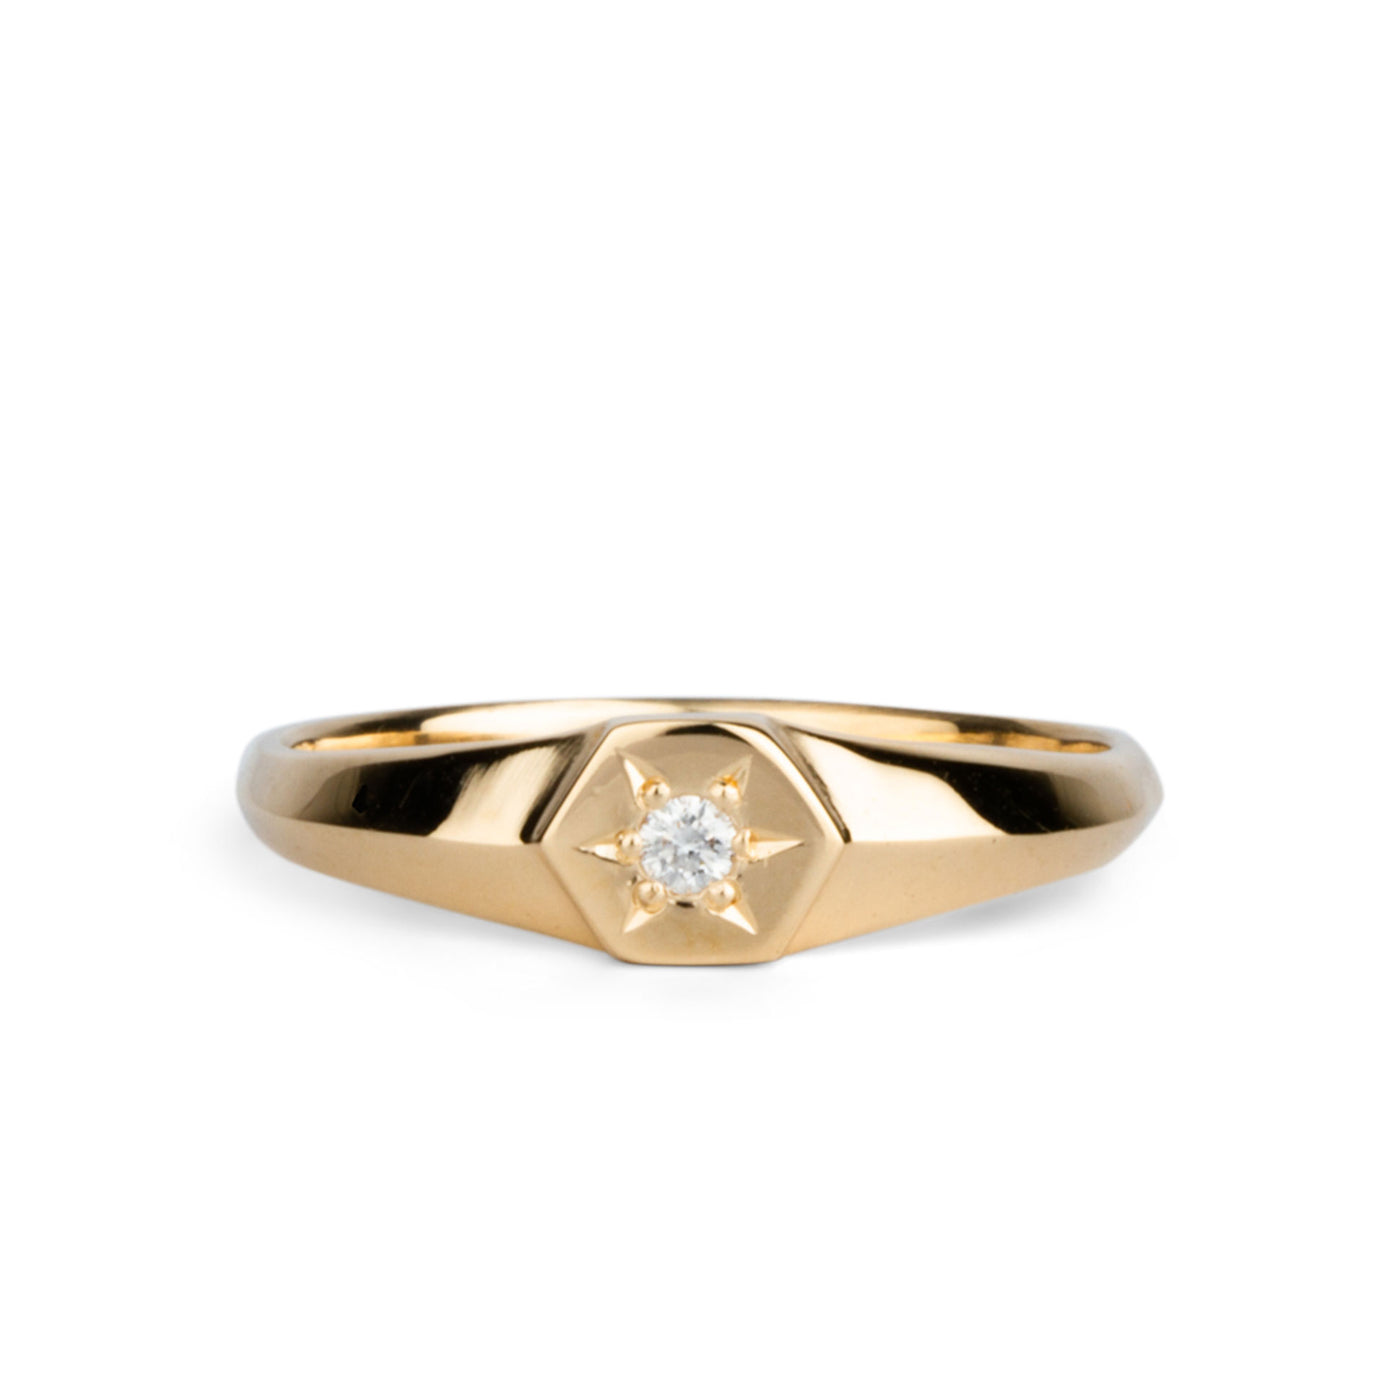 Pinky Signet Ring, 14K Gold Pinky Hexagon Signet Ring, Small Hexagonal Ring